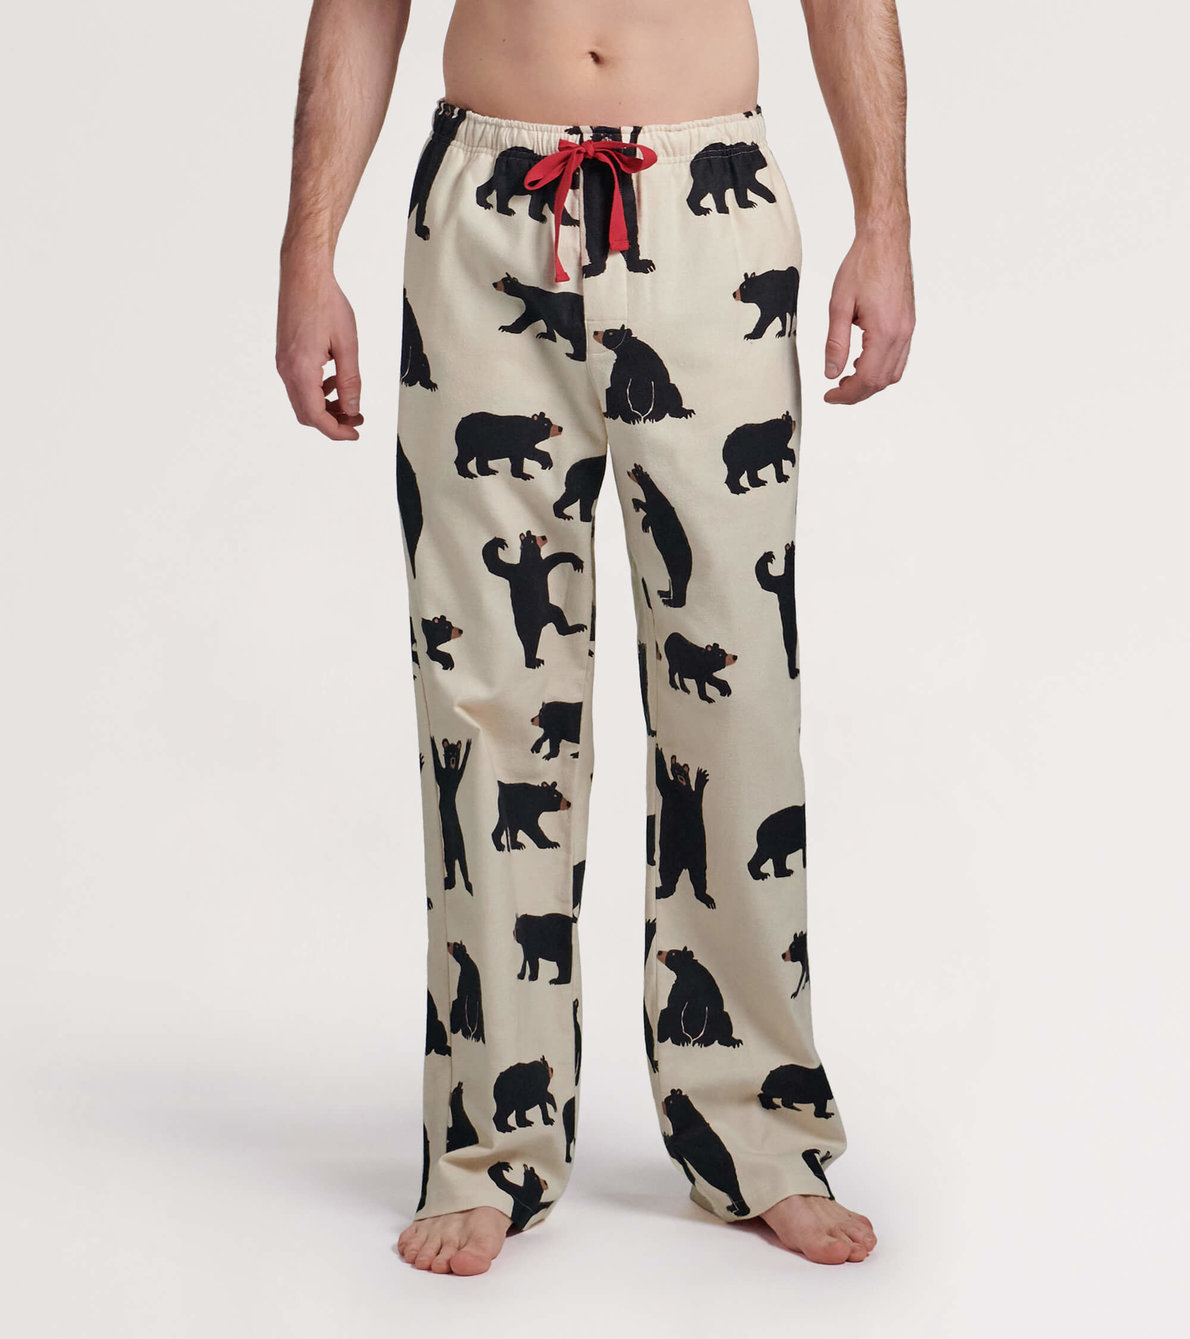 View larger image of Black Bears Men's Flannel Pajama Pants